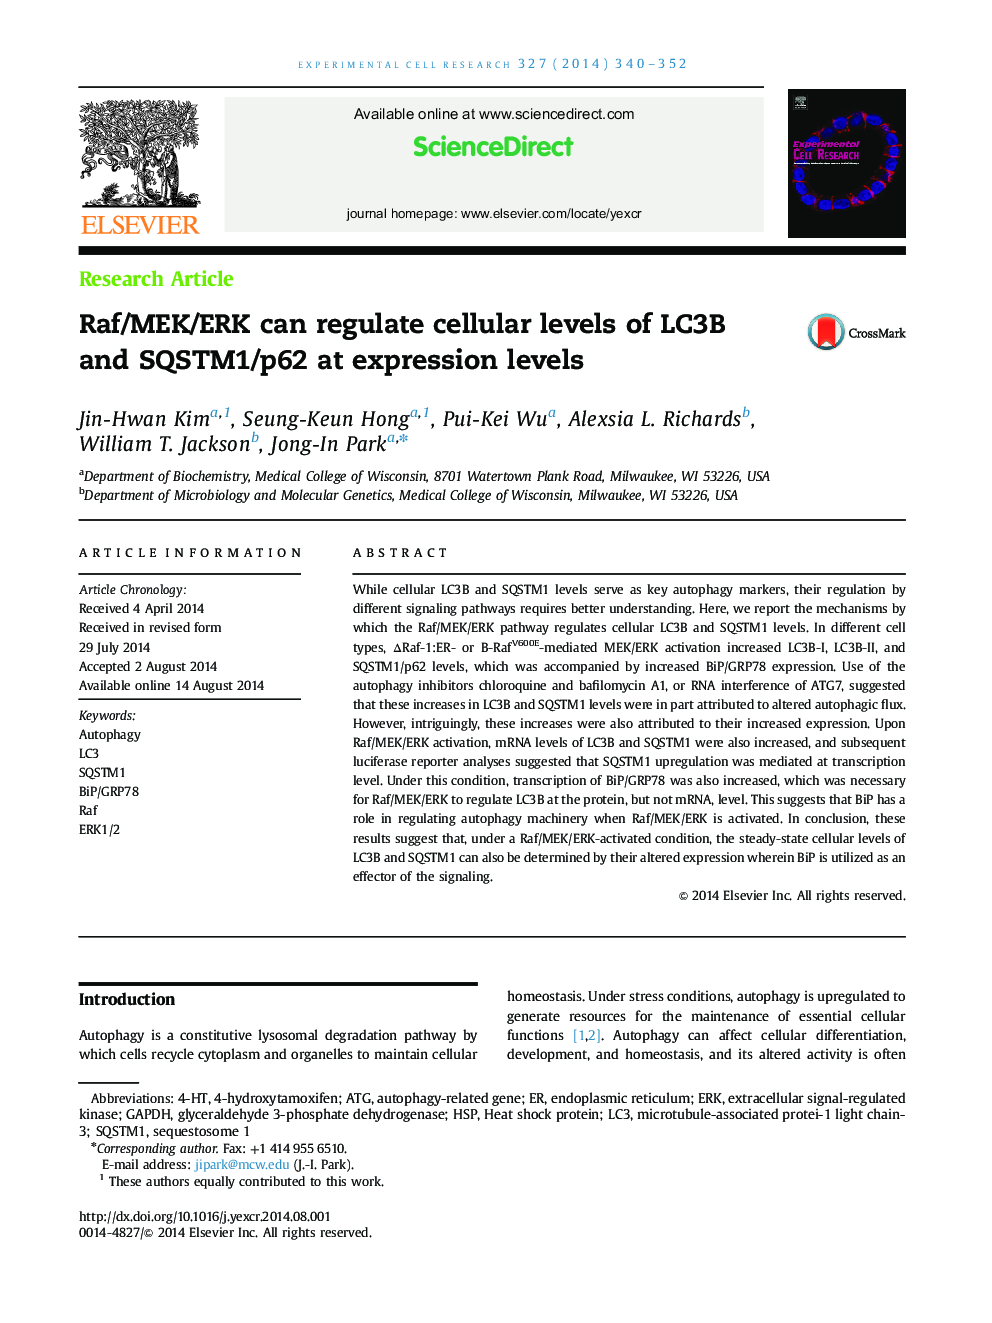 Raf/MEK/ERK can regulate cellular levels of LC3B and SQSTM1/p62 at expression levels